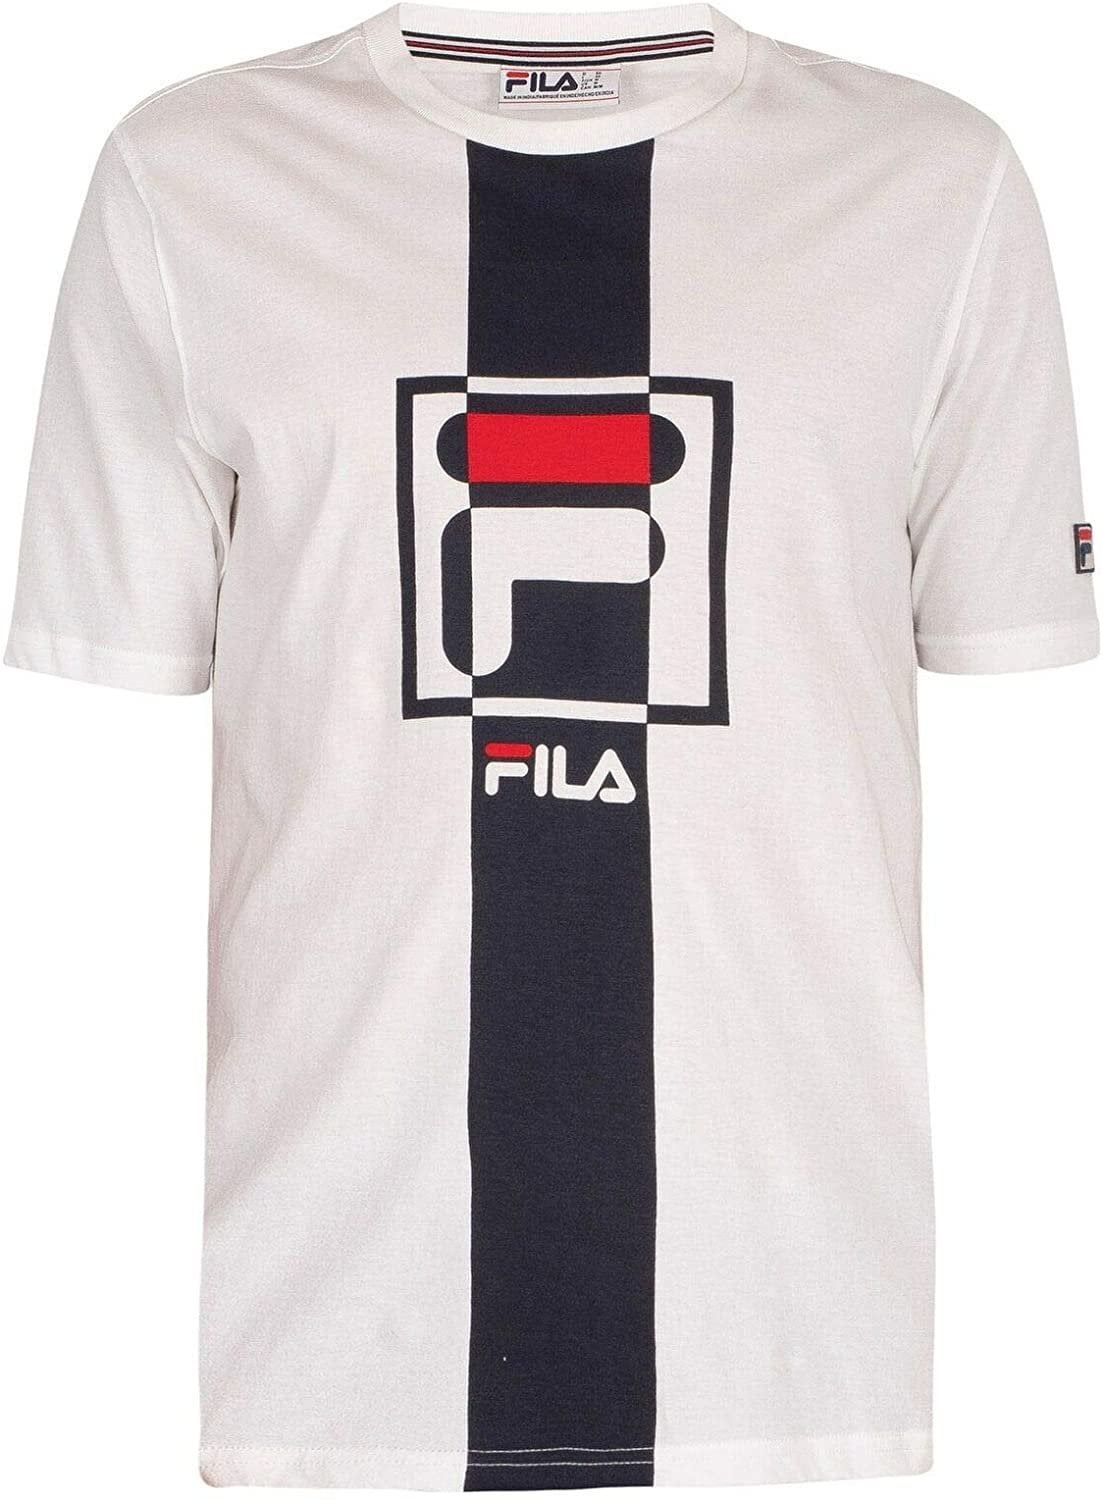 Fila Men's Wes Graphic T-Shirt White, Small - Walmart.com